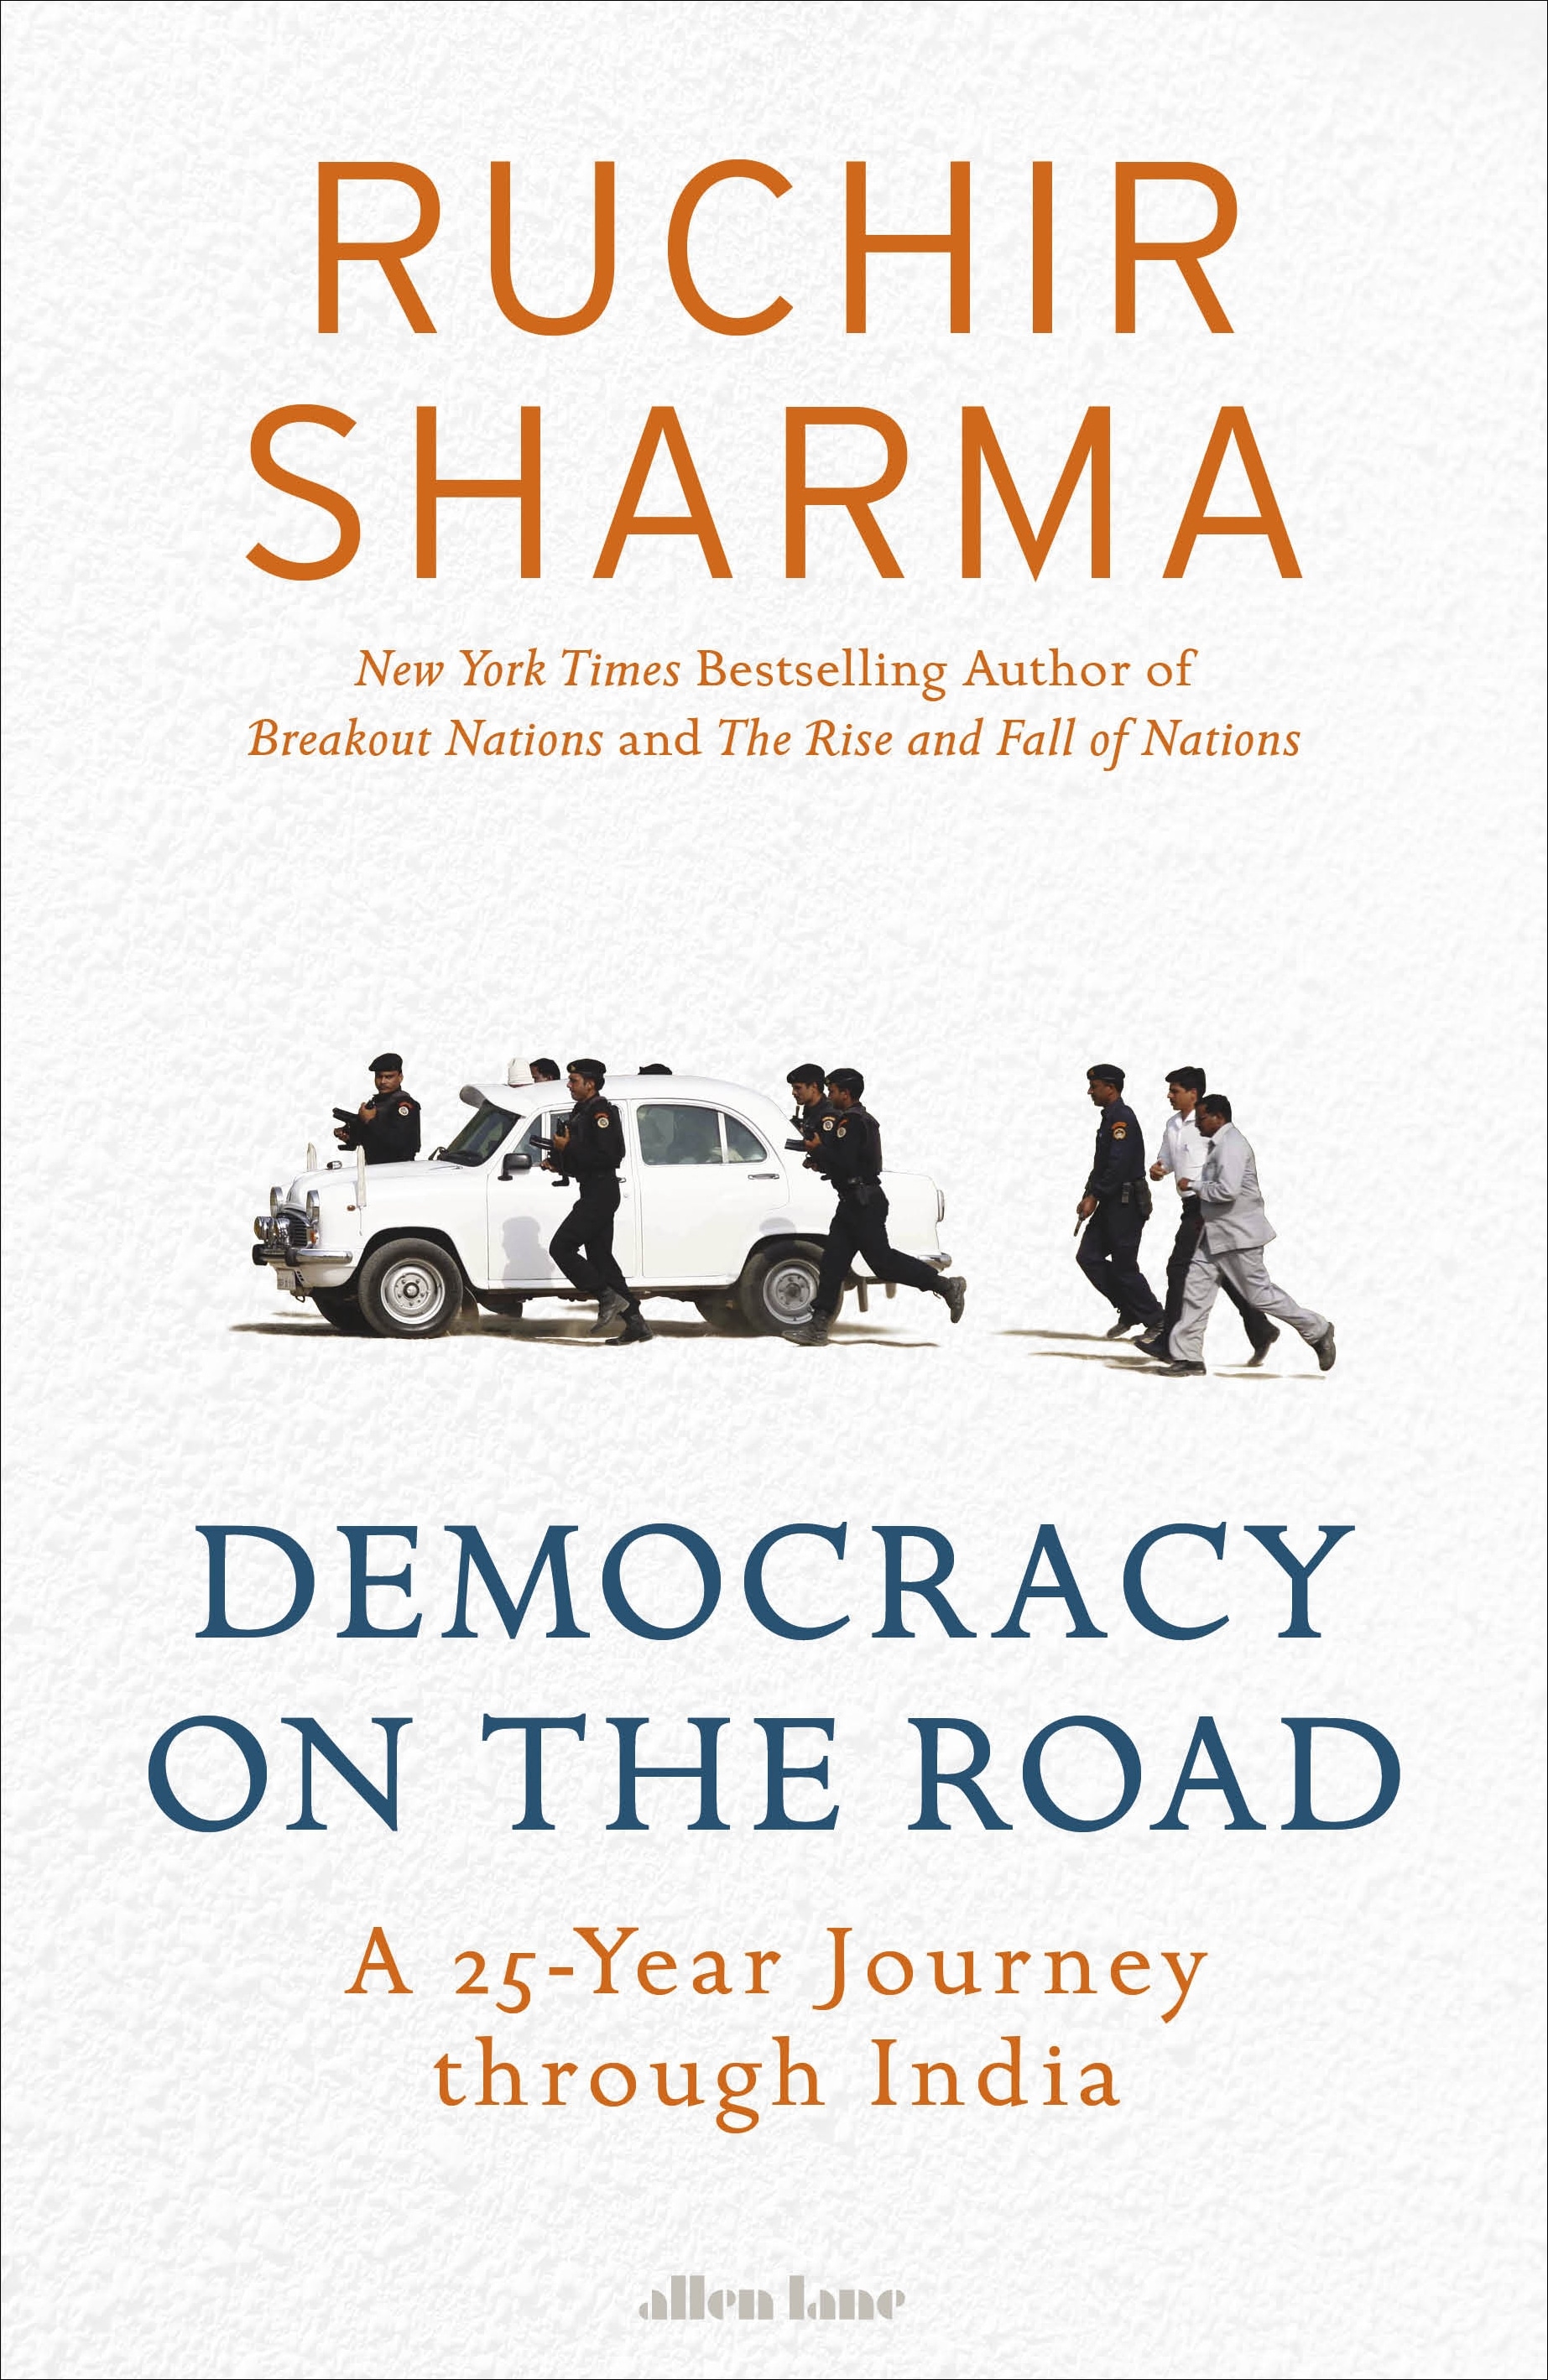 Book “Democracy on the Road” by Ruchir Sharma — February 28, 2019